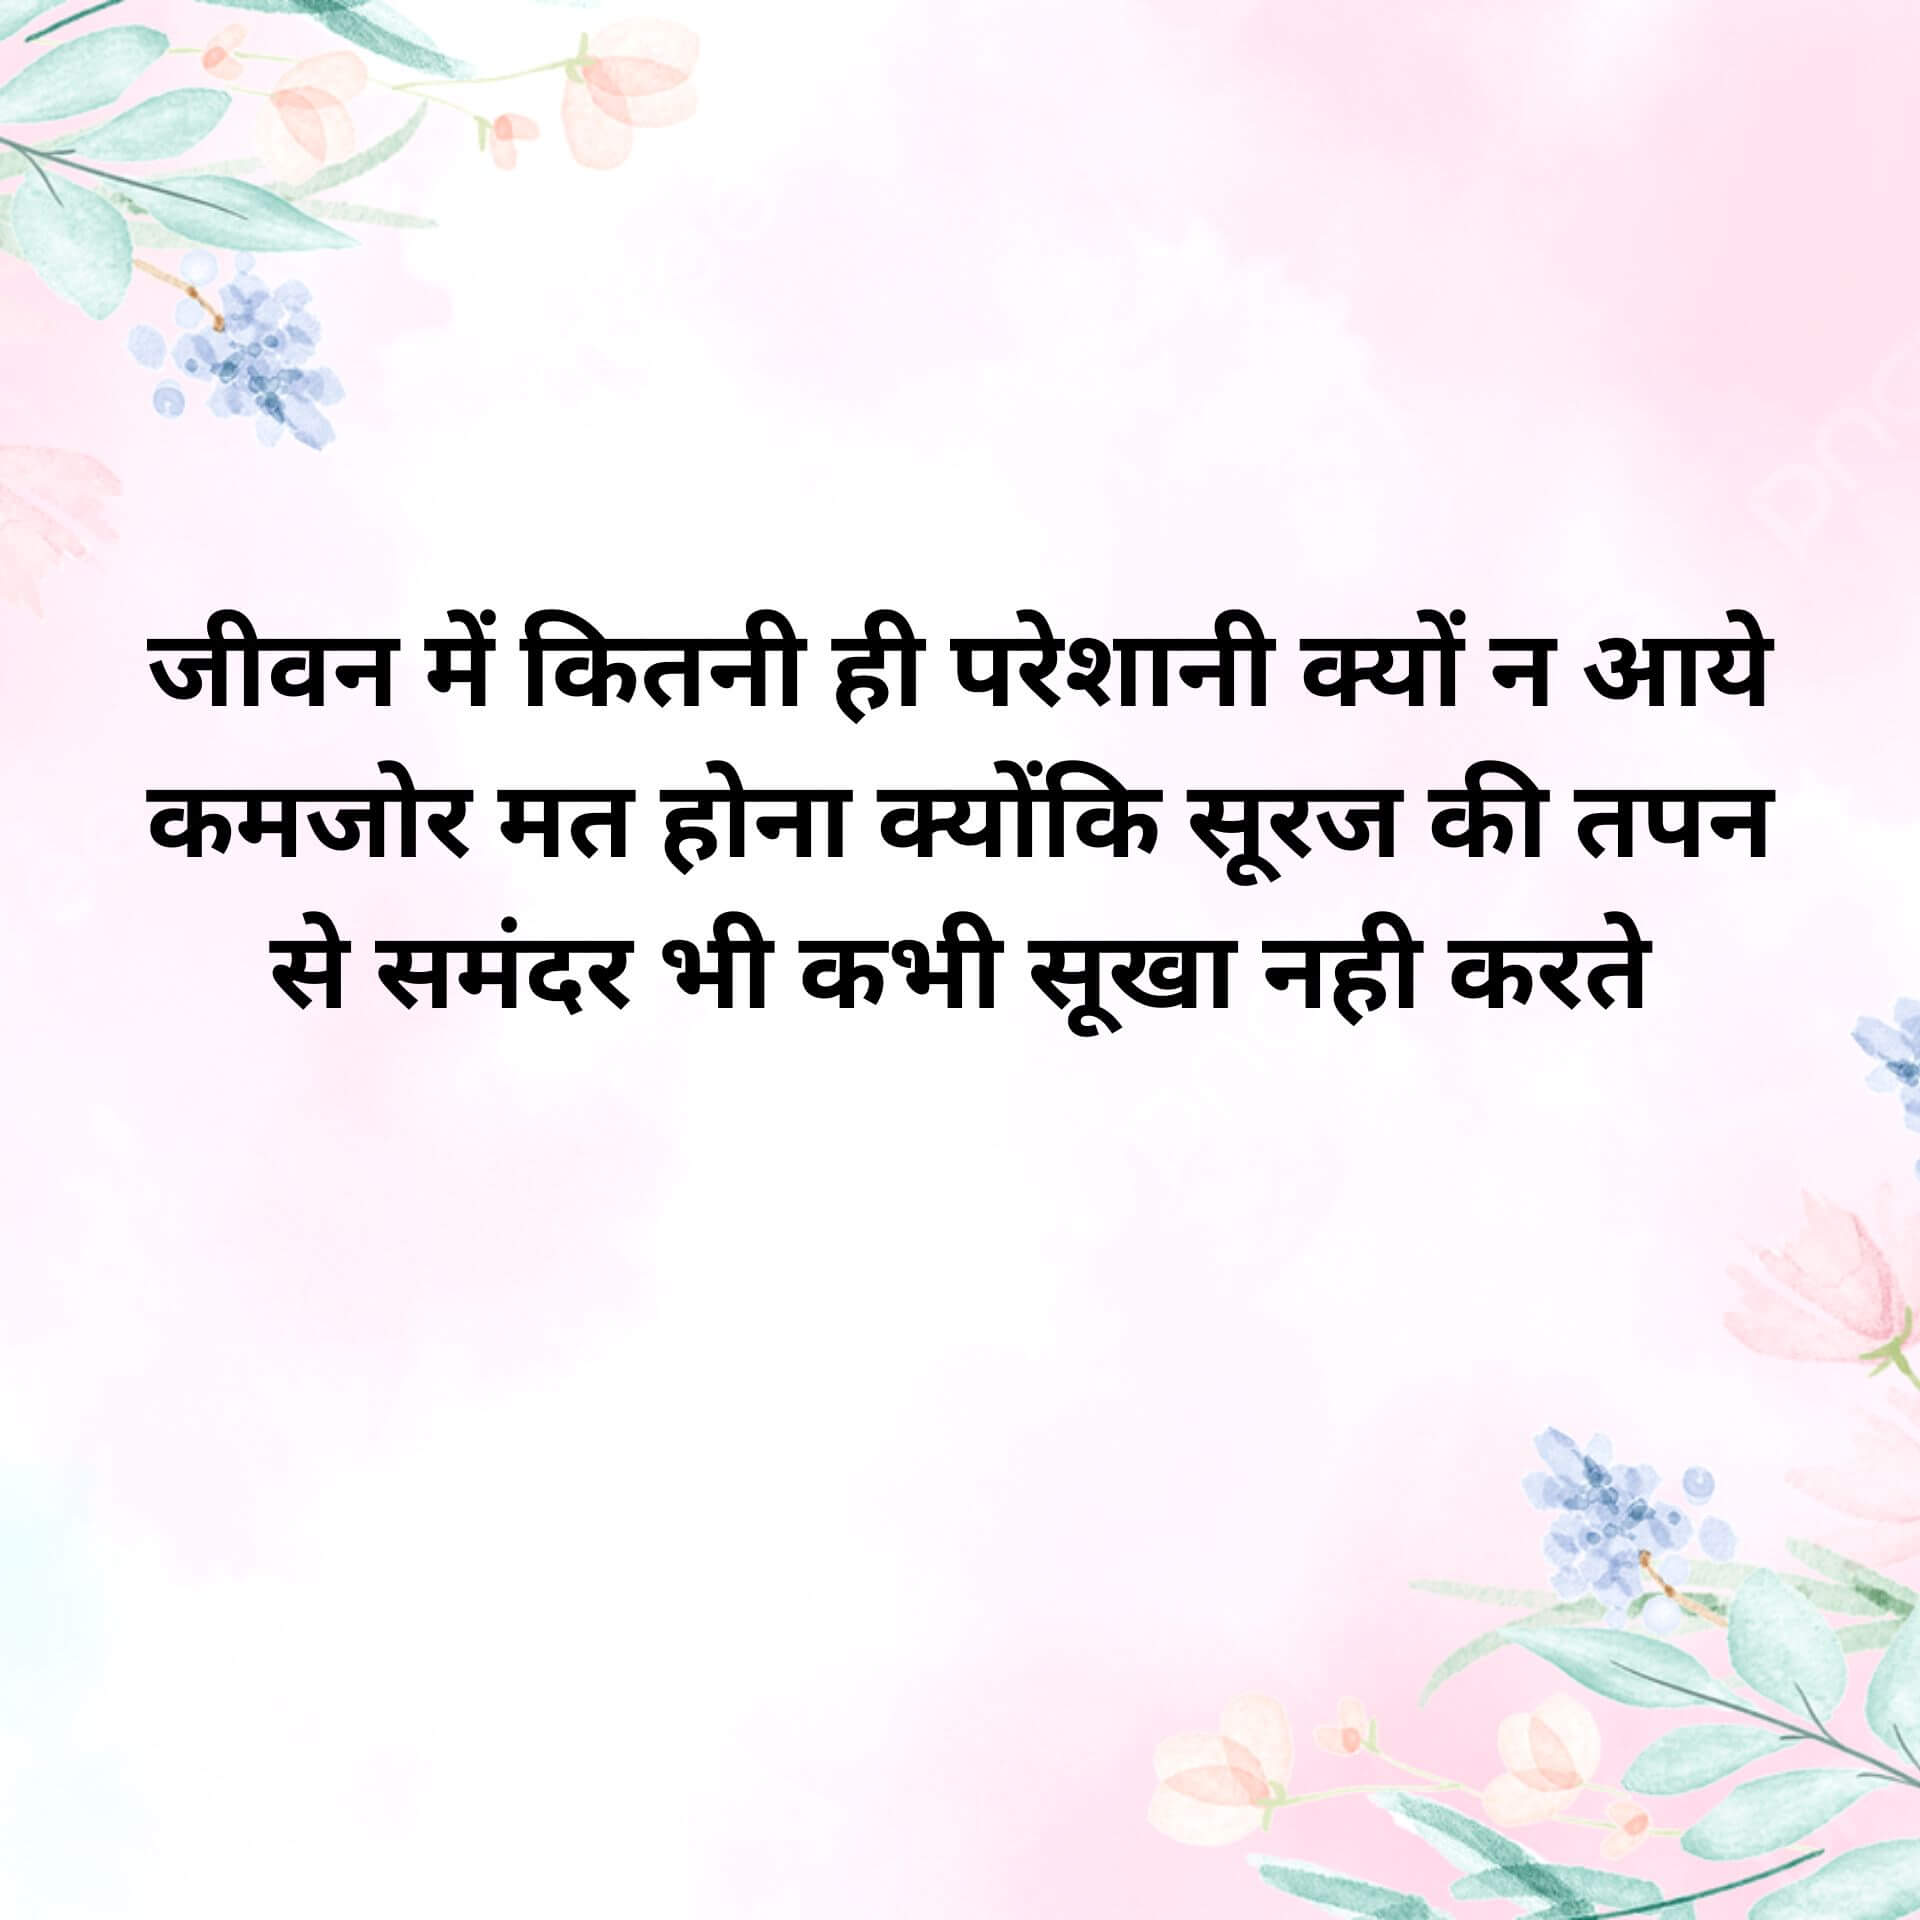 Free Hindi Motivational Quotes Wallpaper Download 2